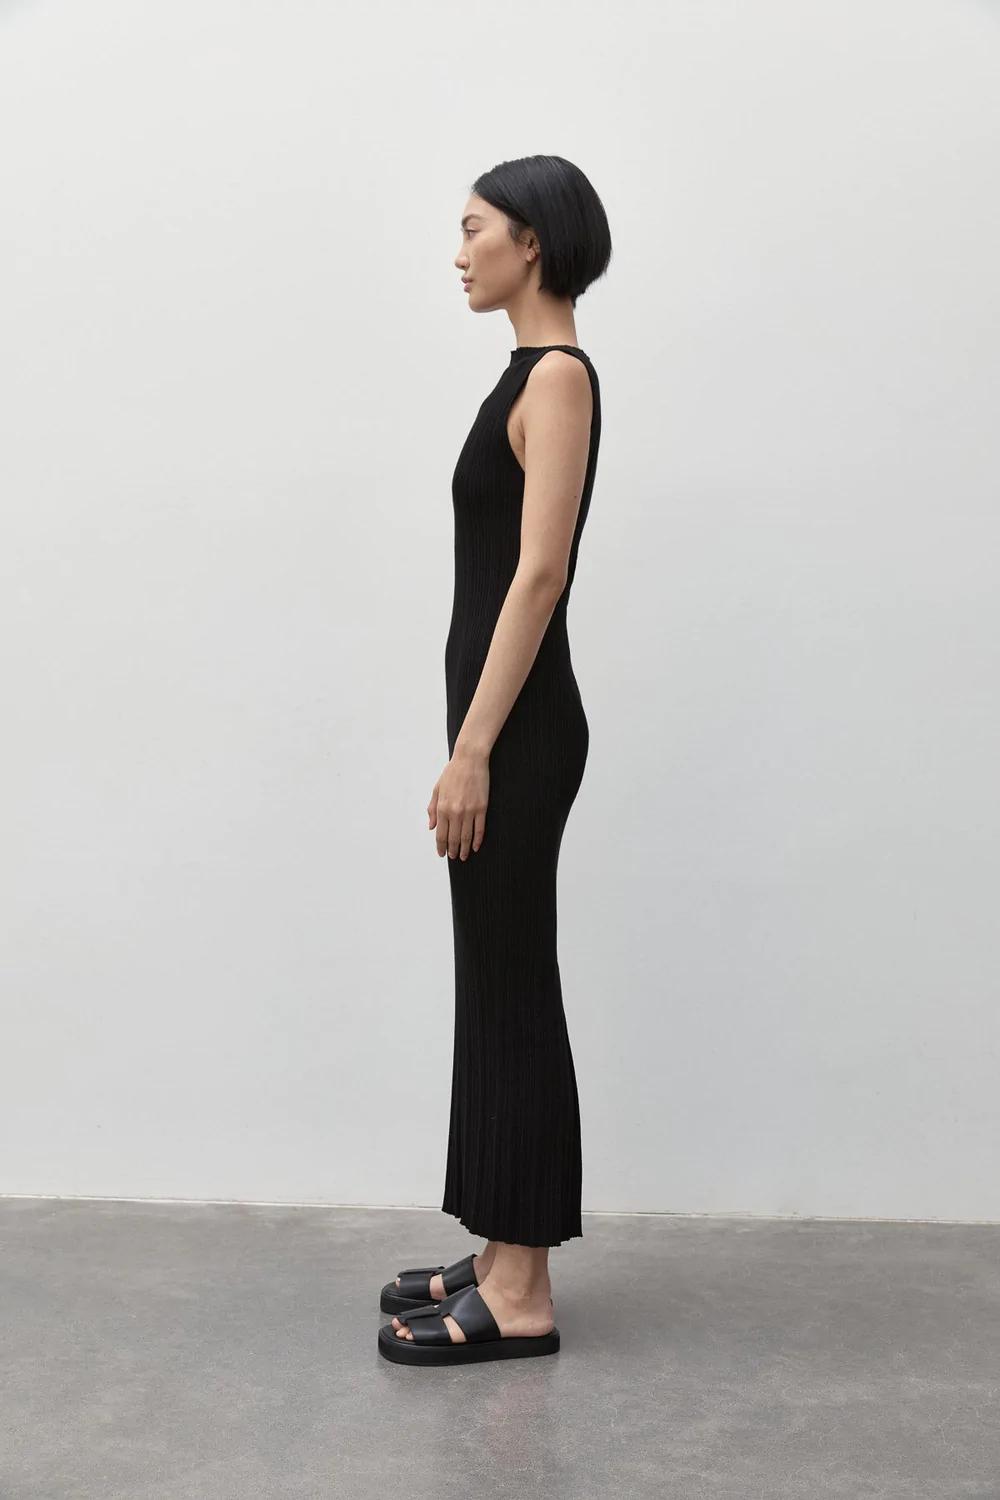 Product Image for Vas Pleat Knit Dress, Black